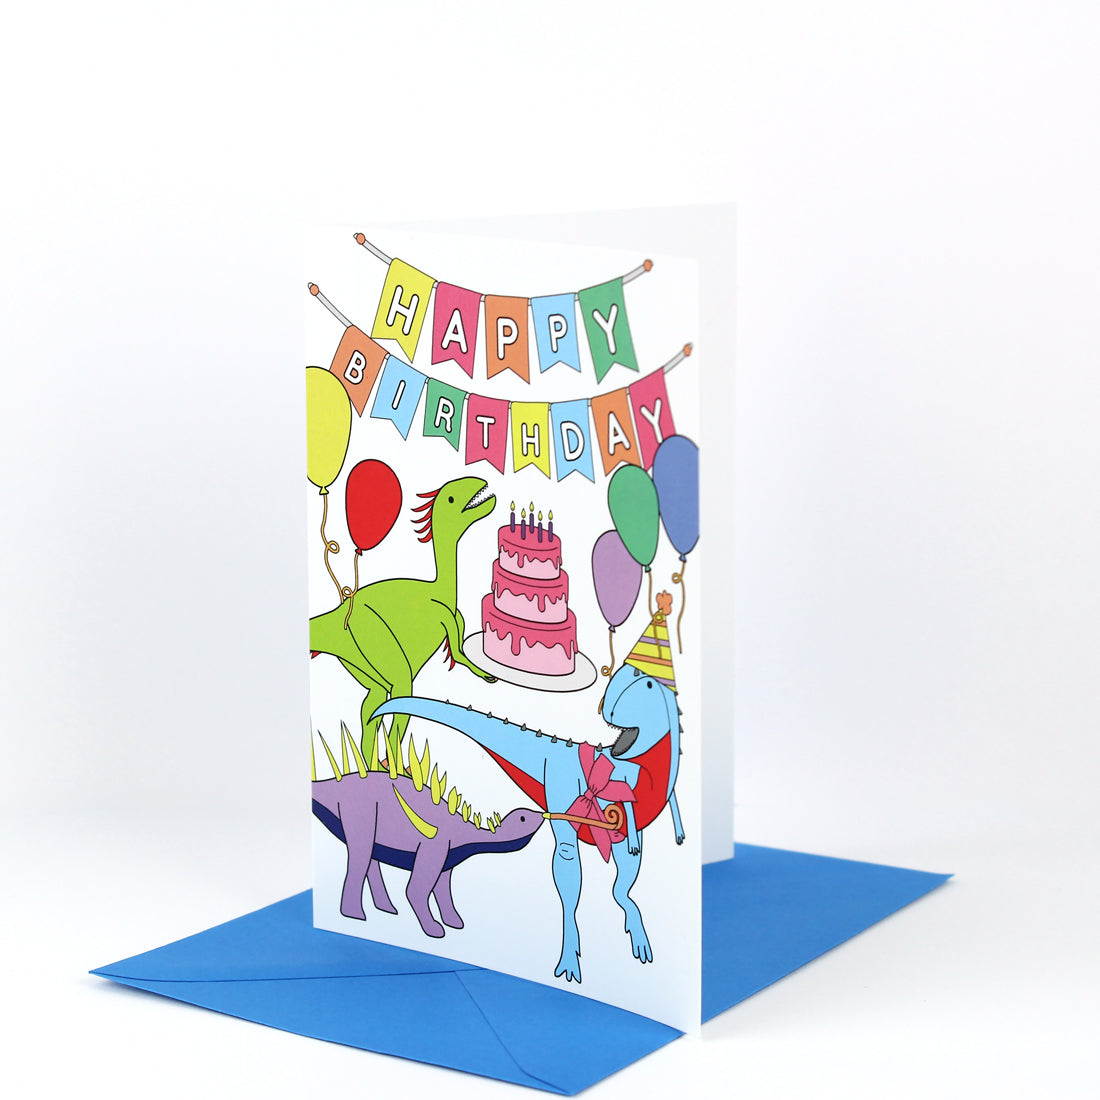 Happy birthday dinosaur card with blue envelope